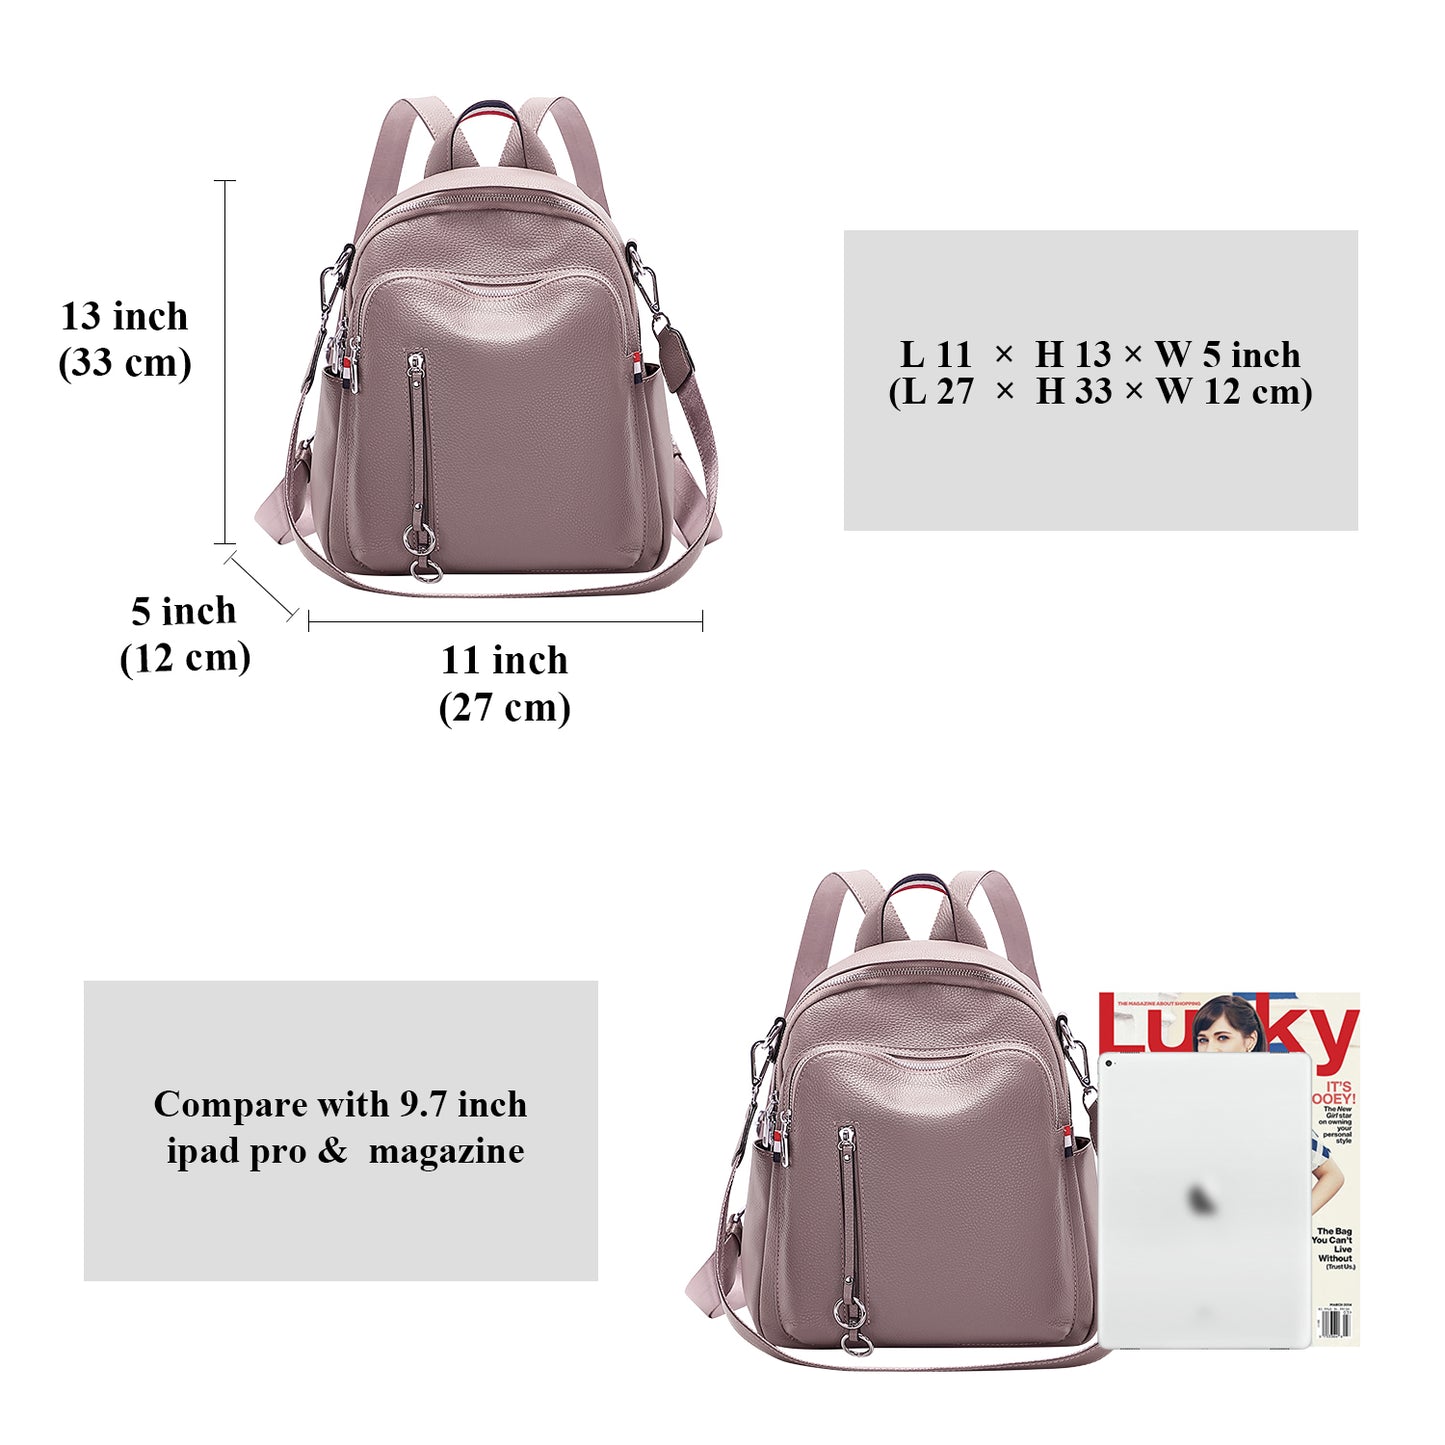 ALTOSY Leather Backpack Purse Medium